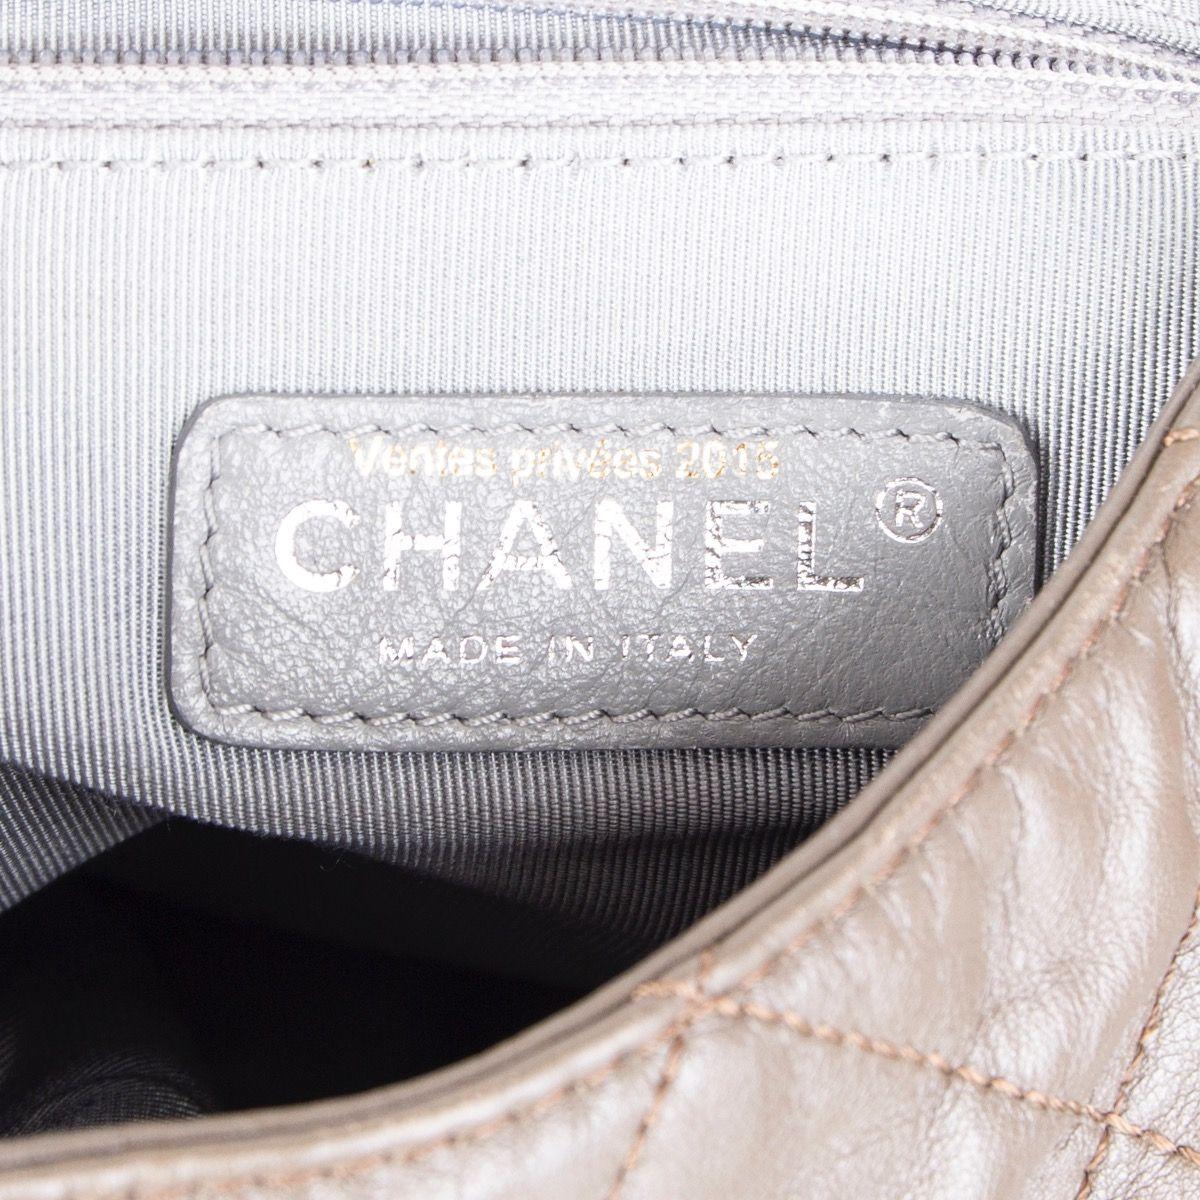 Chanel olive green leather COCO PLEATS LARGE HOBO Shoulder Bag 2